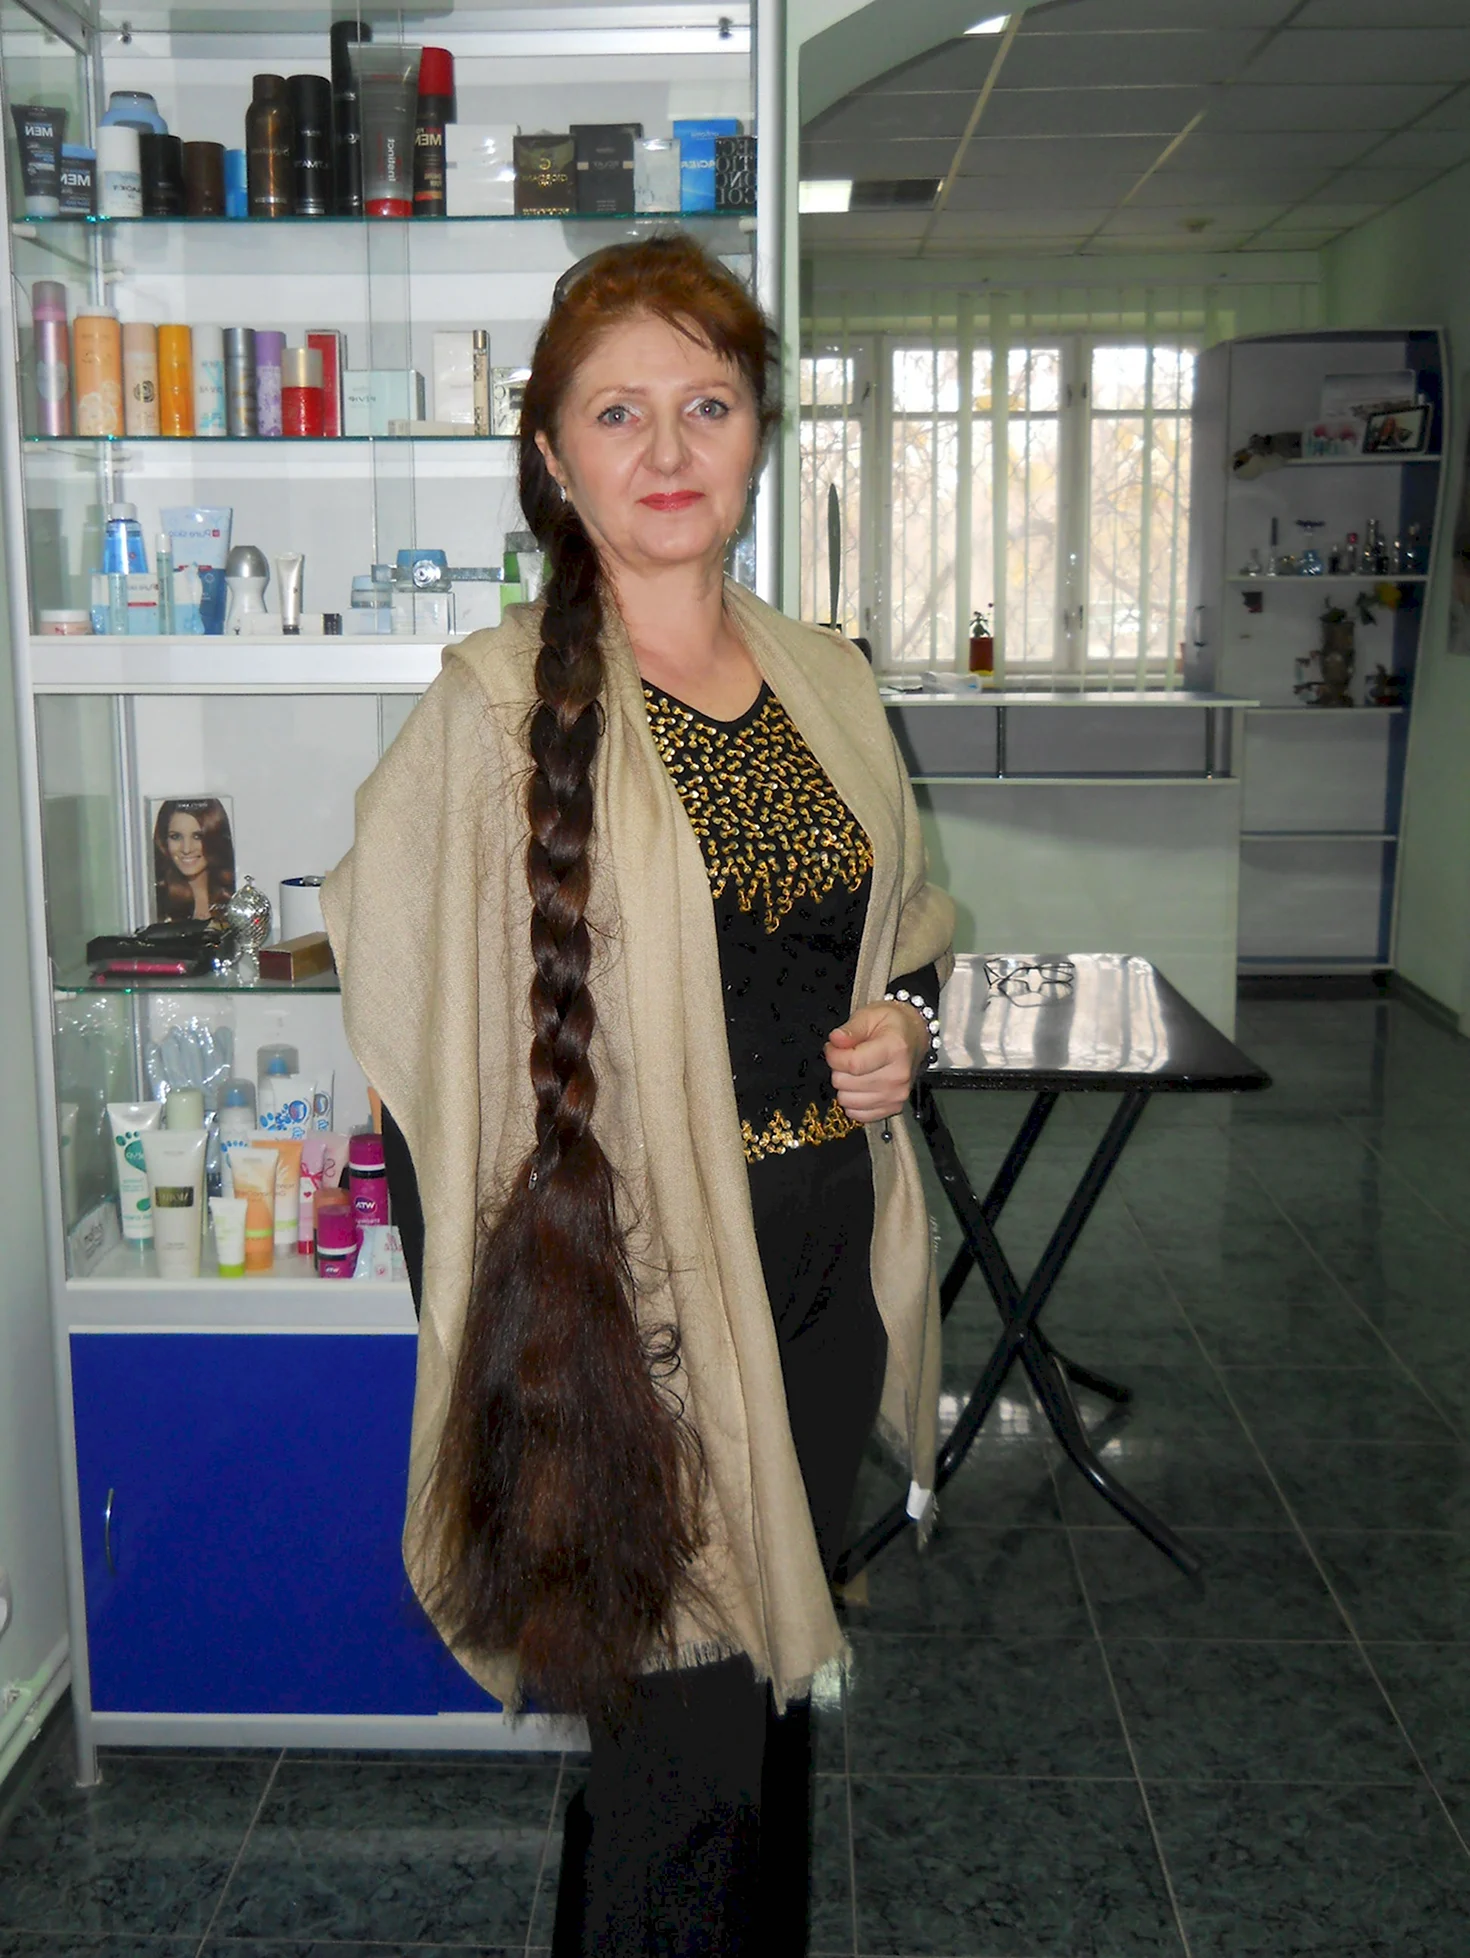 Наталья Онуфрейчук длинная коса